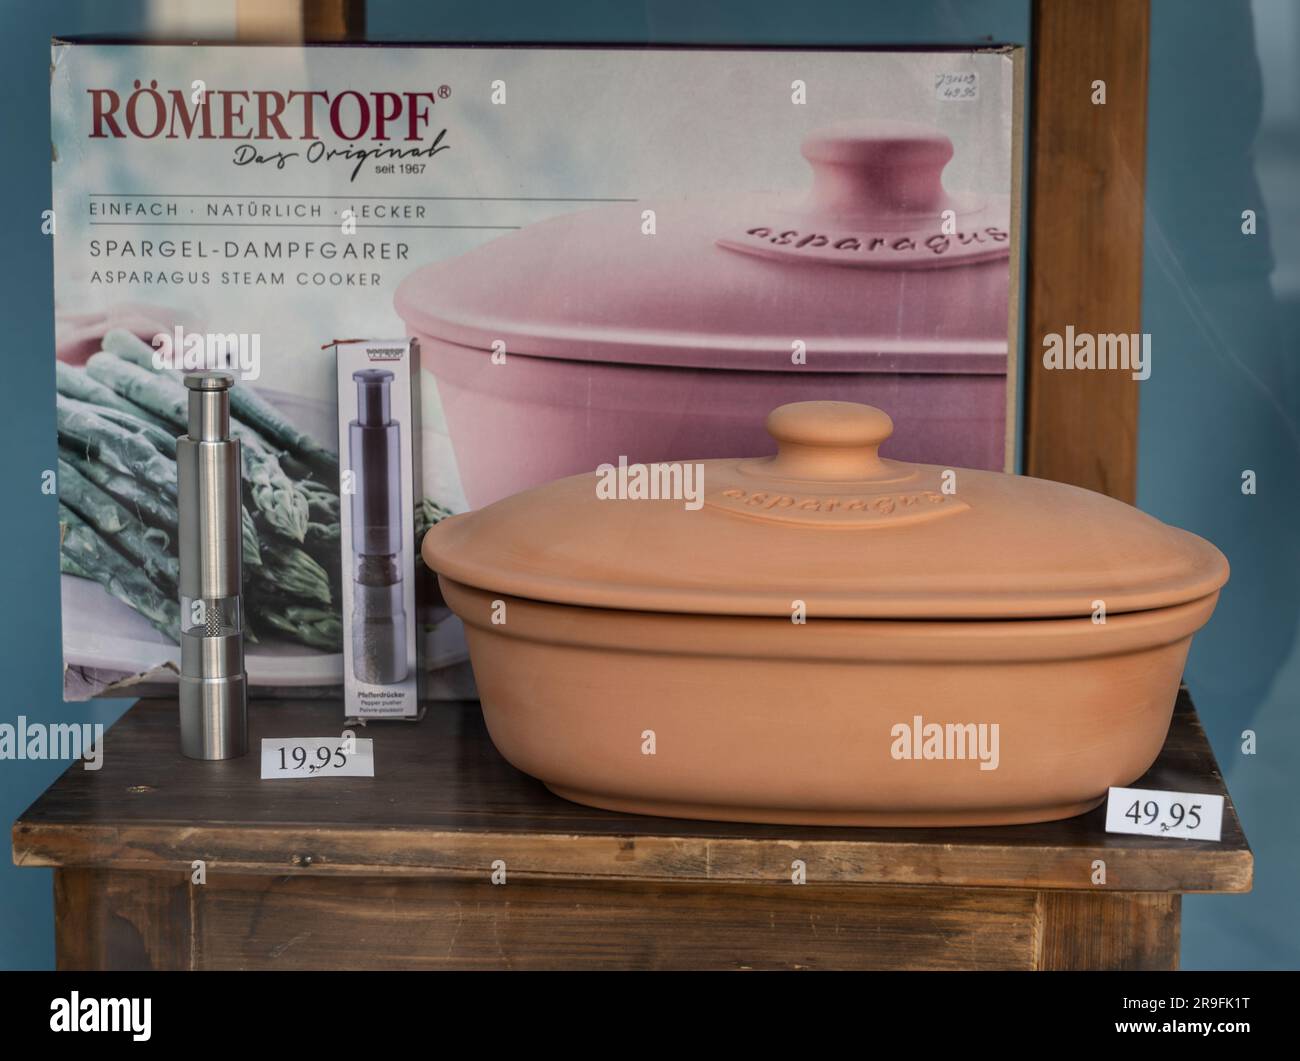 German Romertopf clay cooking pot / casserole dish by Bay